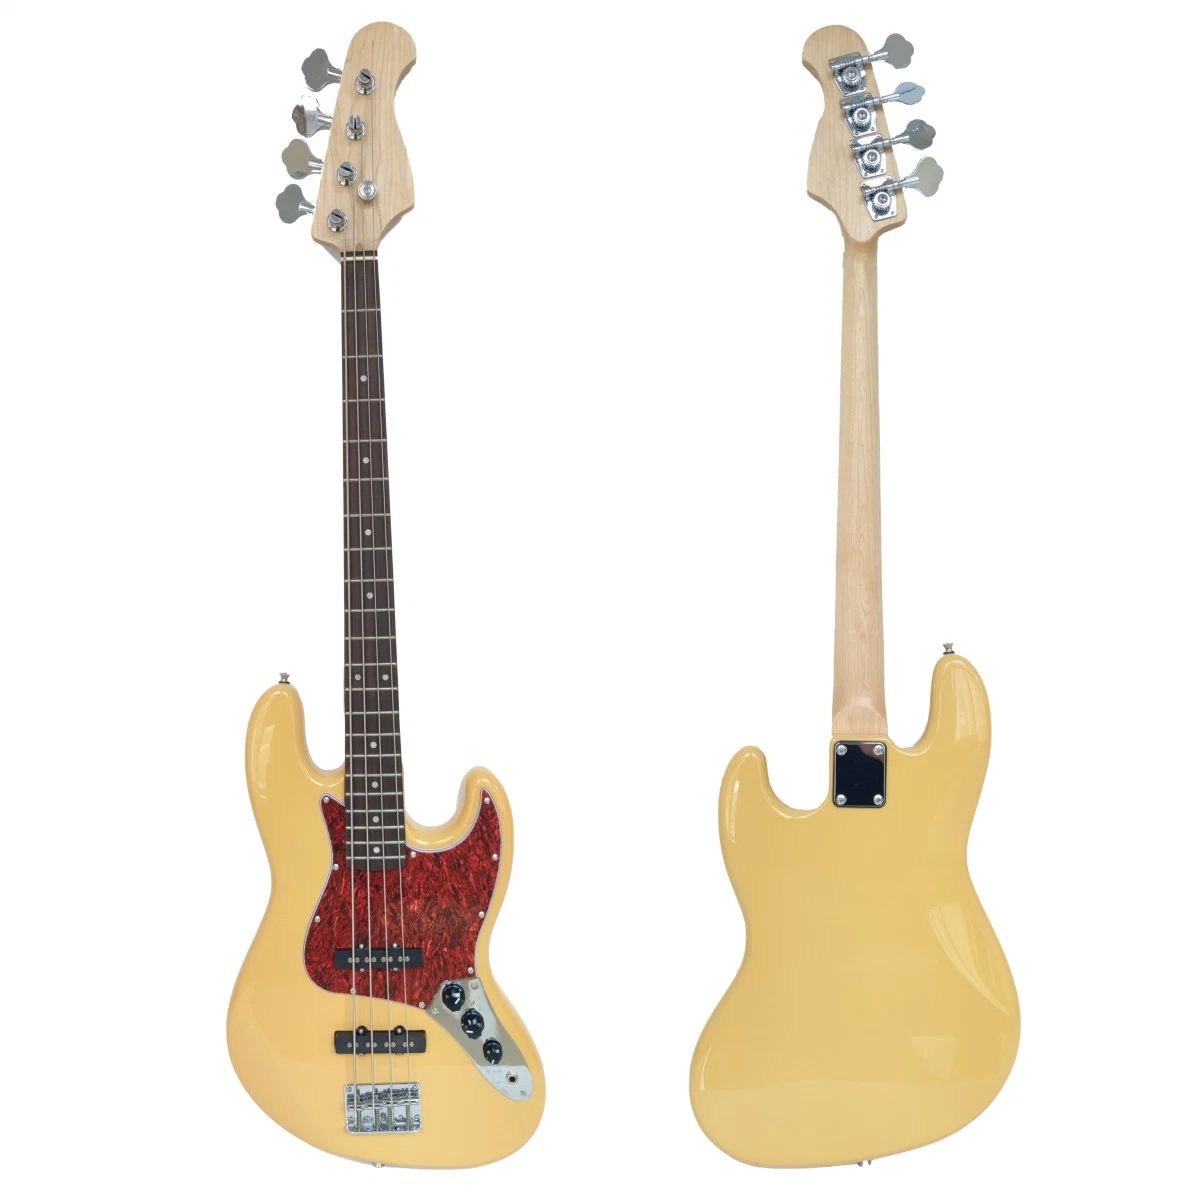 JB Bass para guitarra de bajo eléctrico de tamaño completo para principiantes